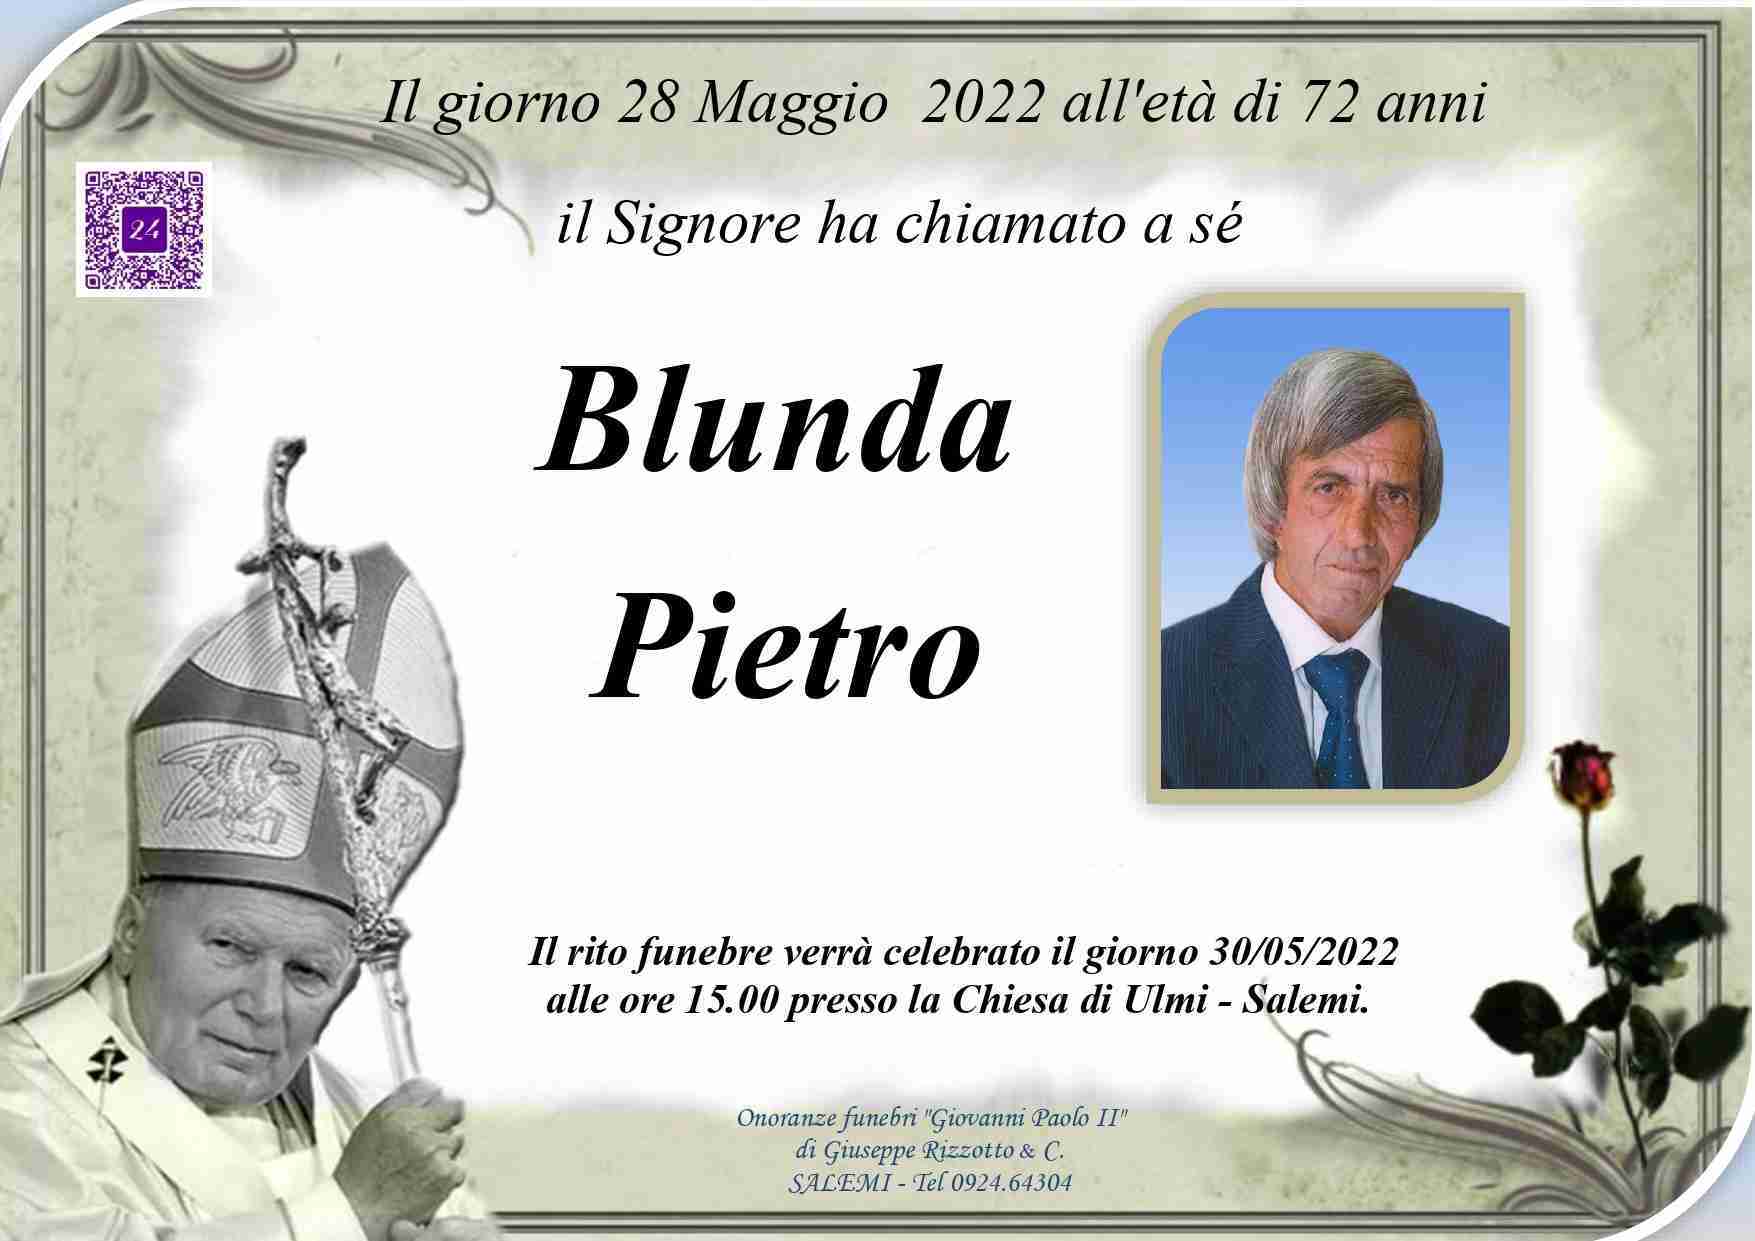 Pietro Blunda